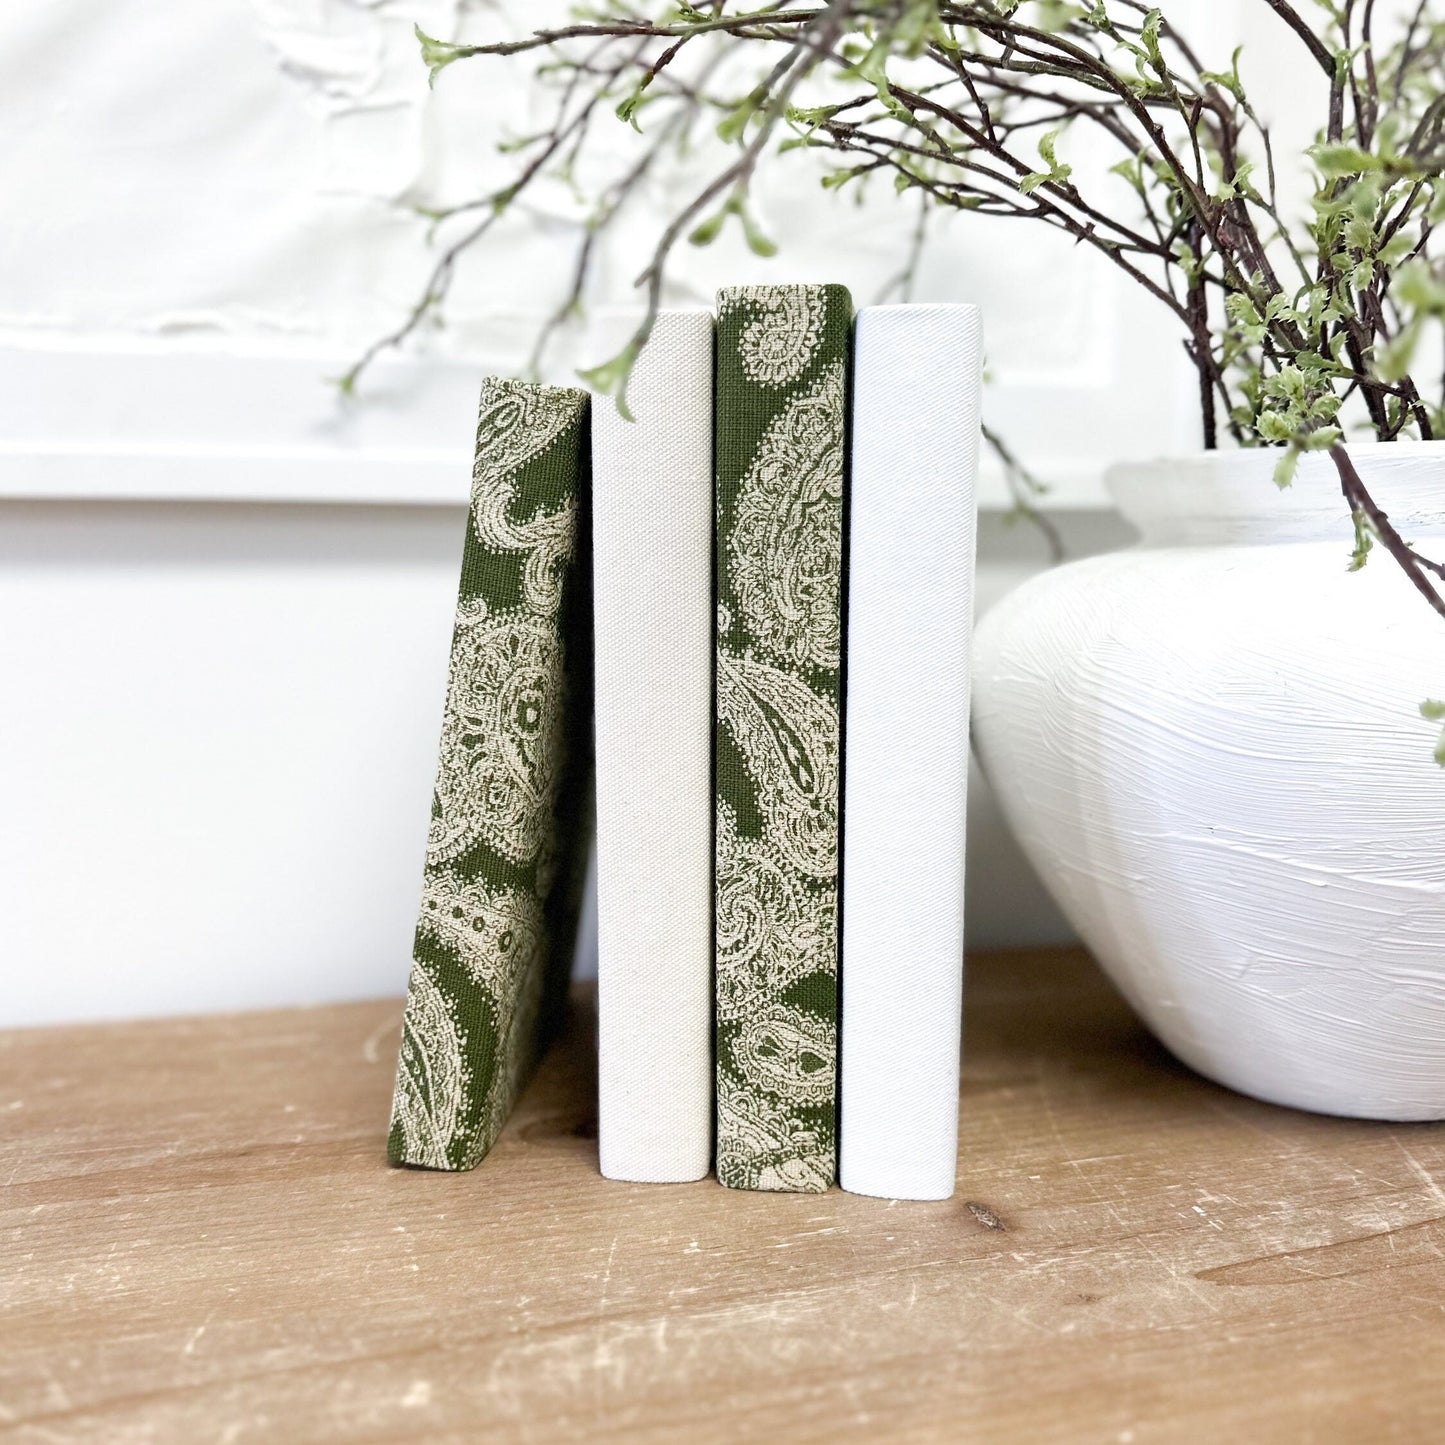 Linen Covered Books, Decorative Books for Home Decor, Bookshelf Decor